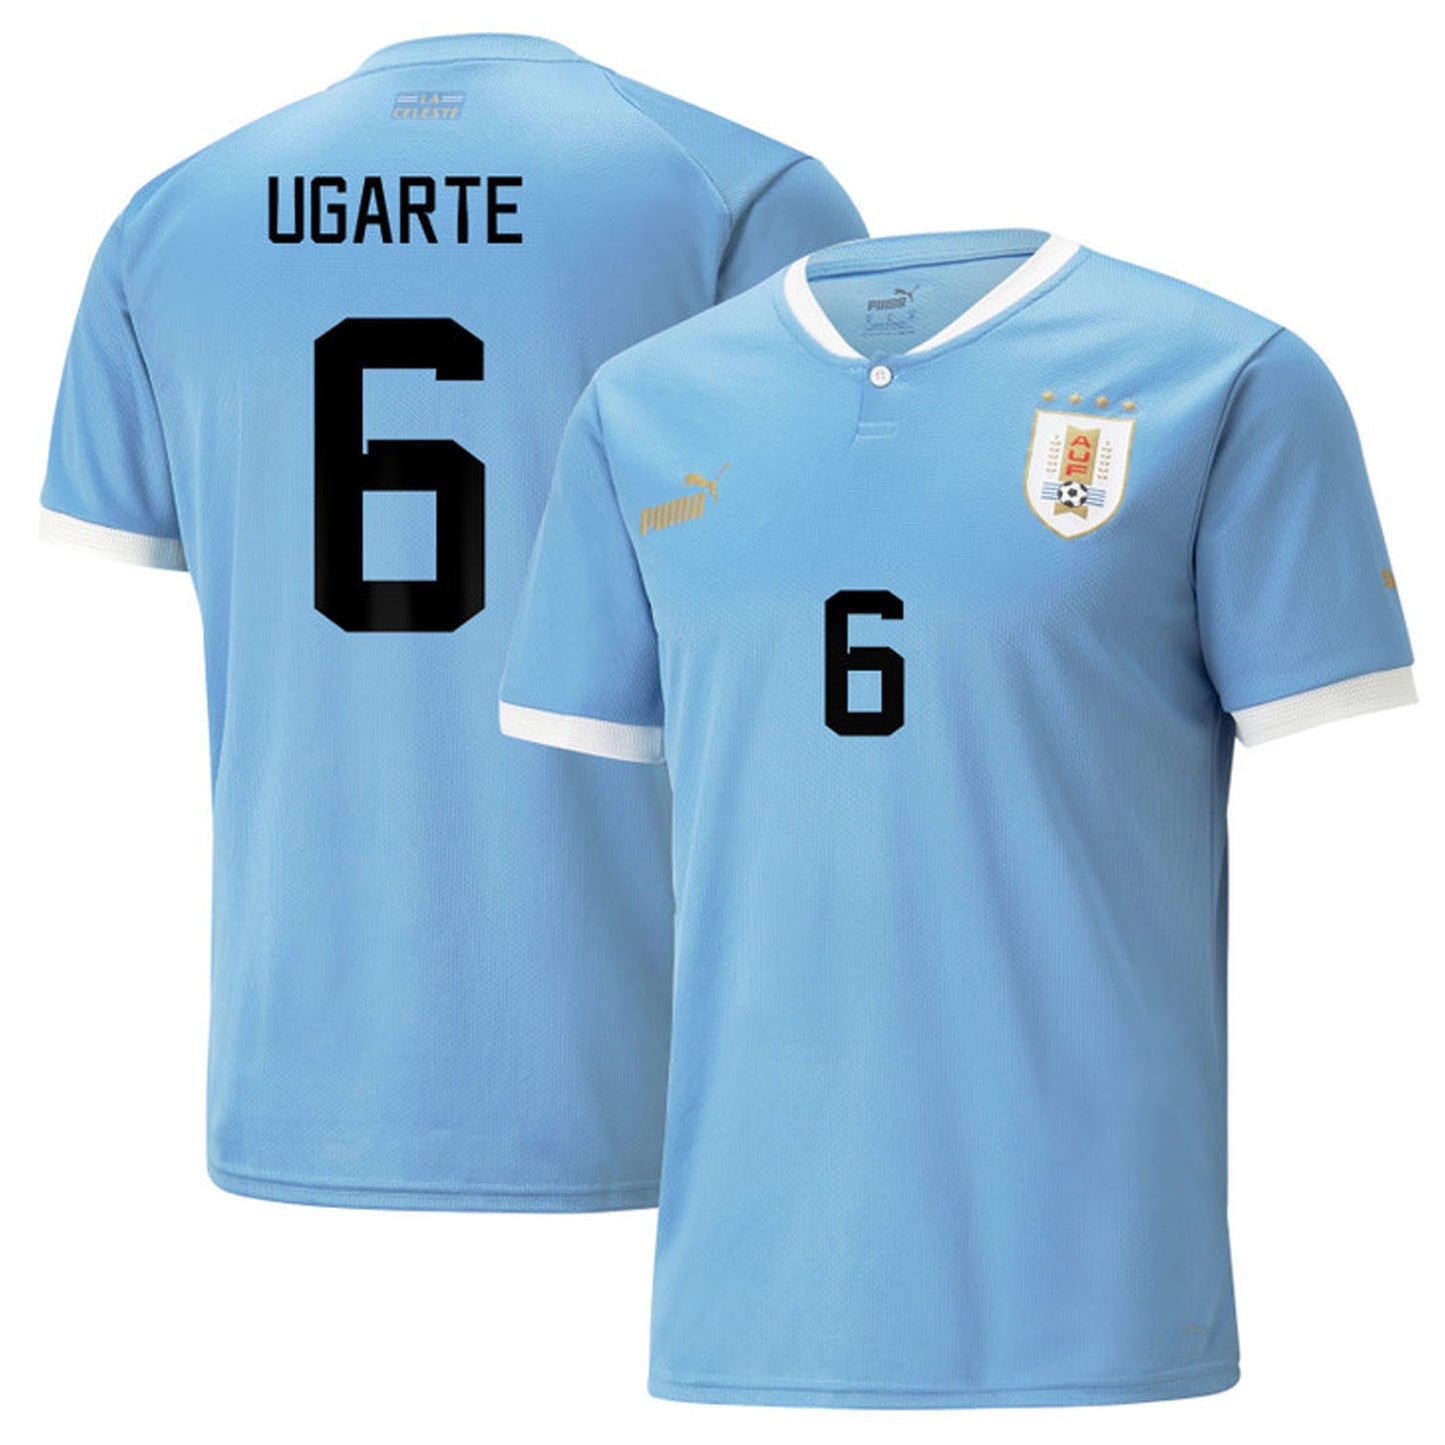 Manuel Ugarte Uruguay 6 Fifa World Cup Jersey